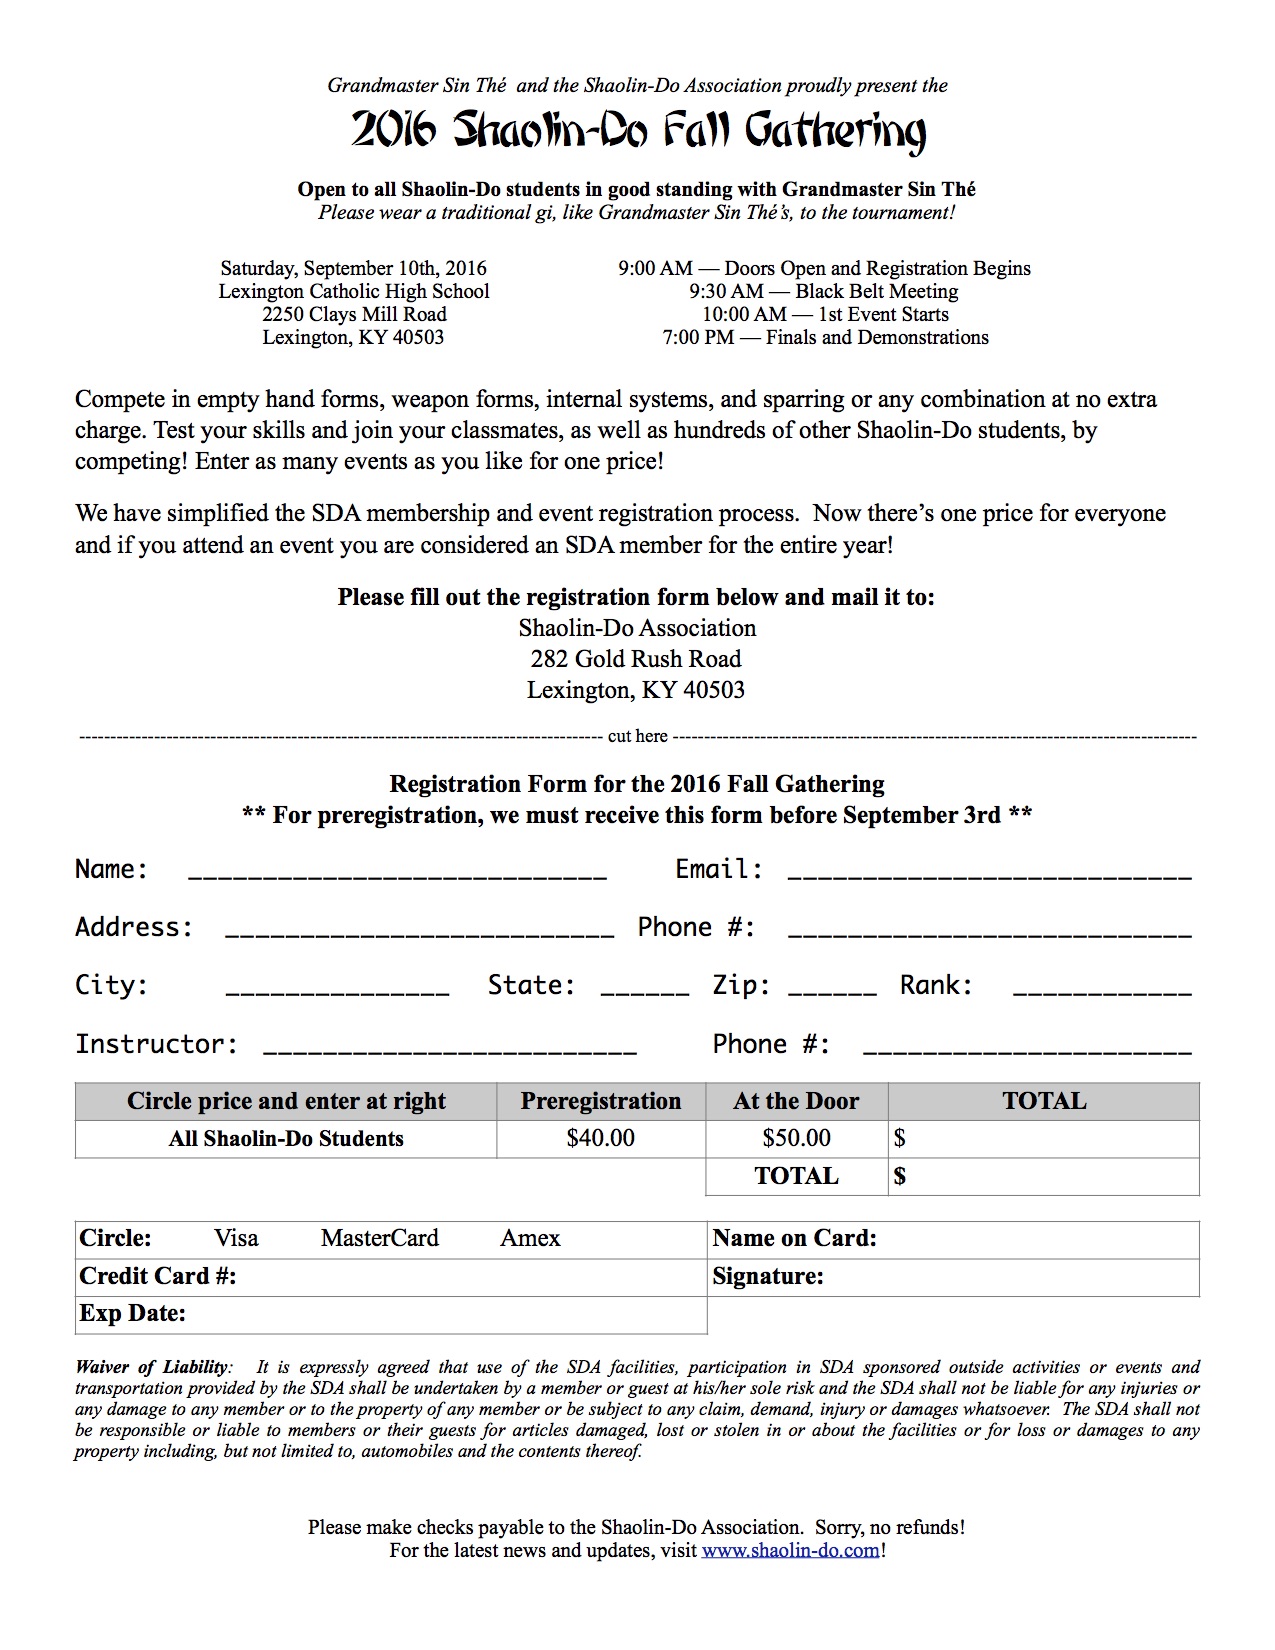 Tournament Flyer and Registration Form